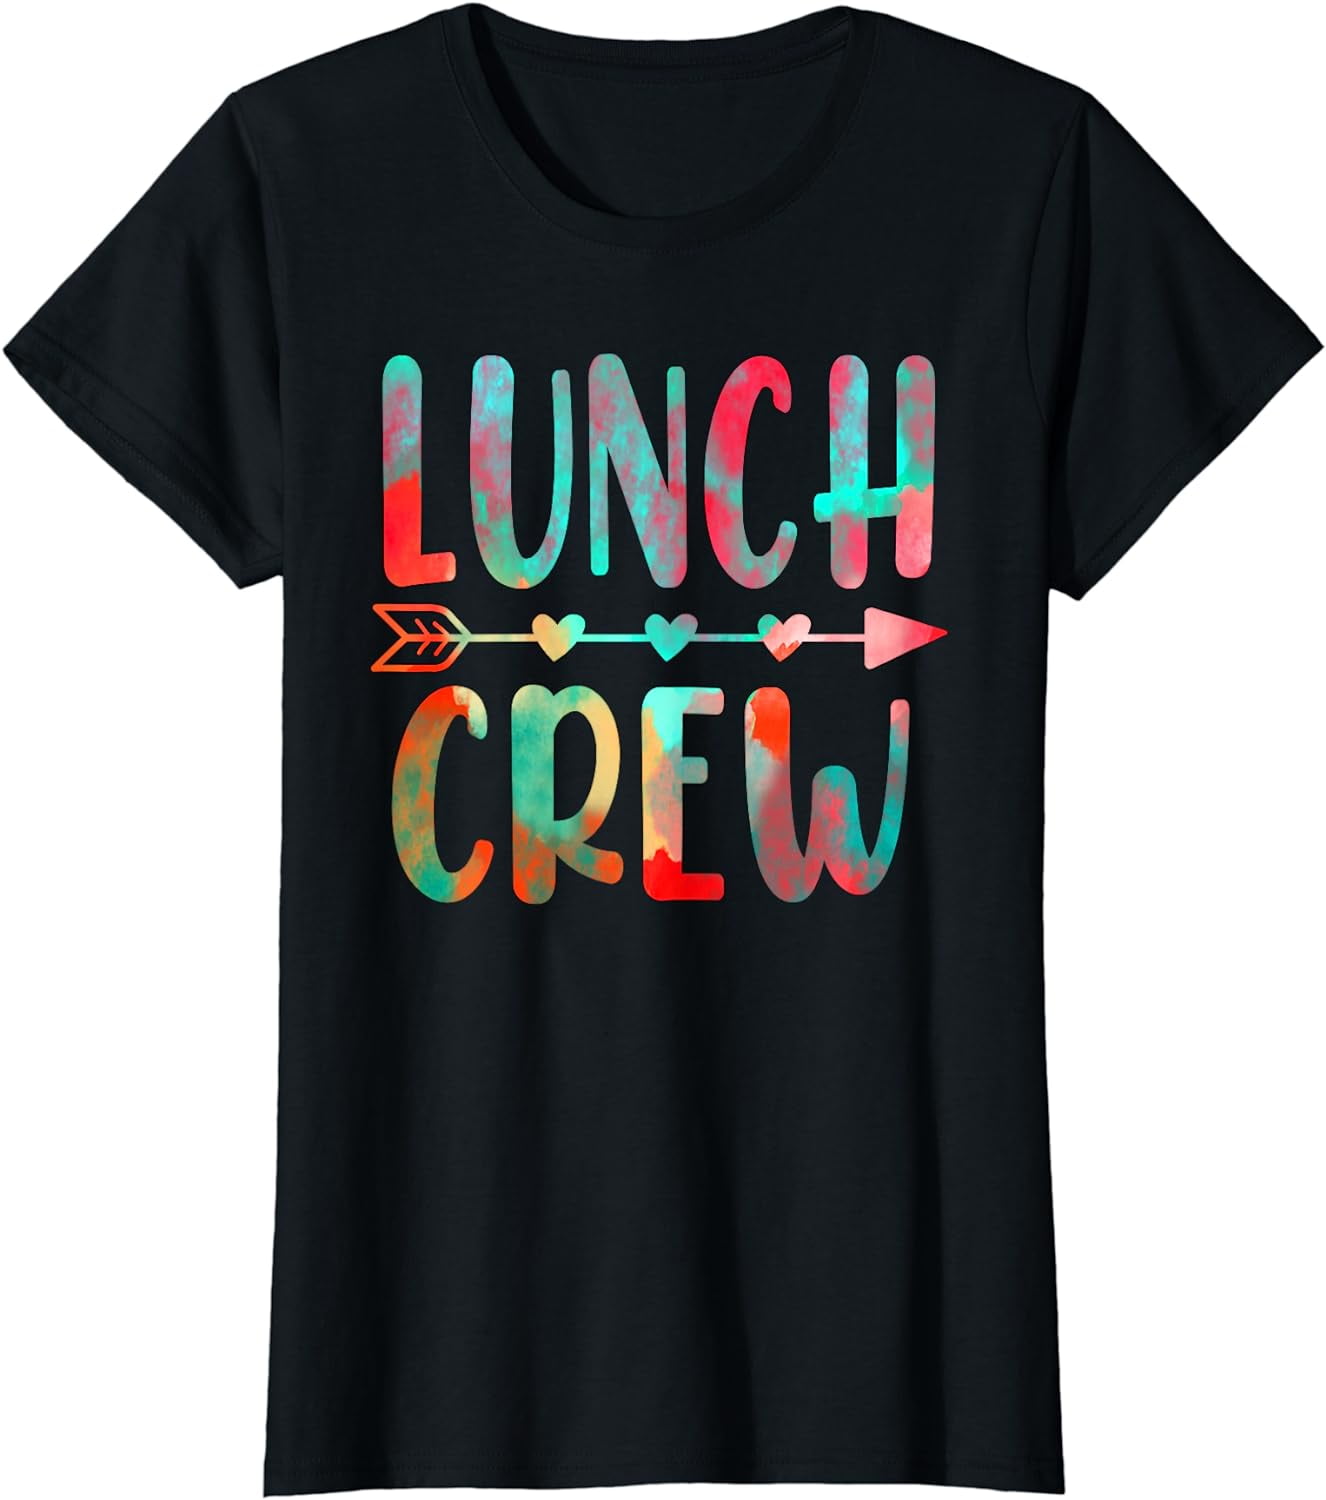 Lunch Crew Shirt, Lunch Lady Shirt, Cafeteria Worker Shirt T-Shirt ...